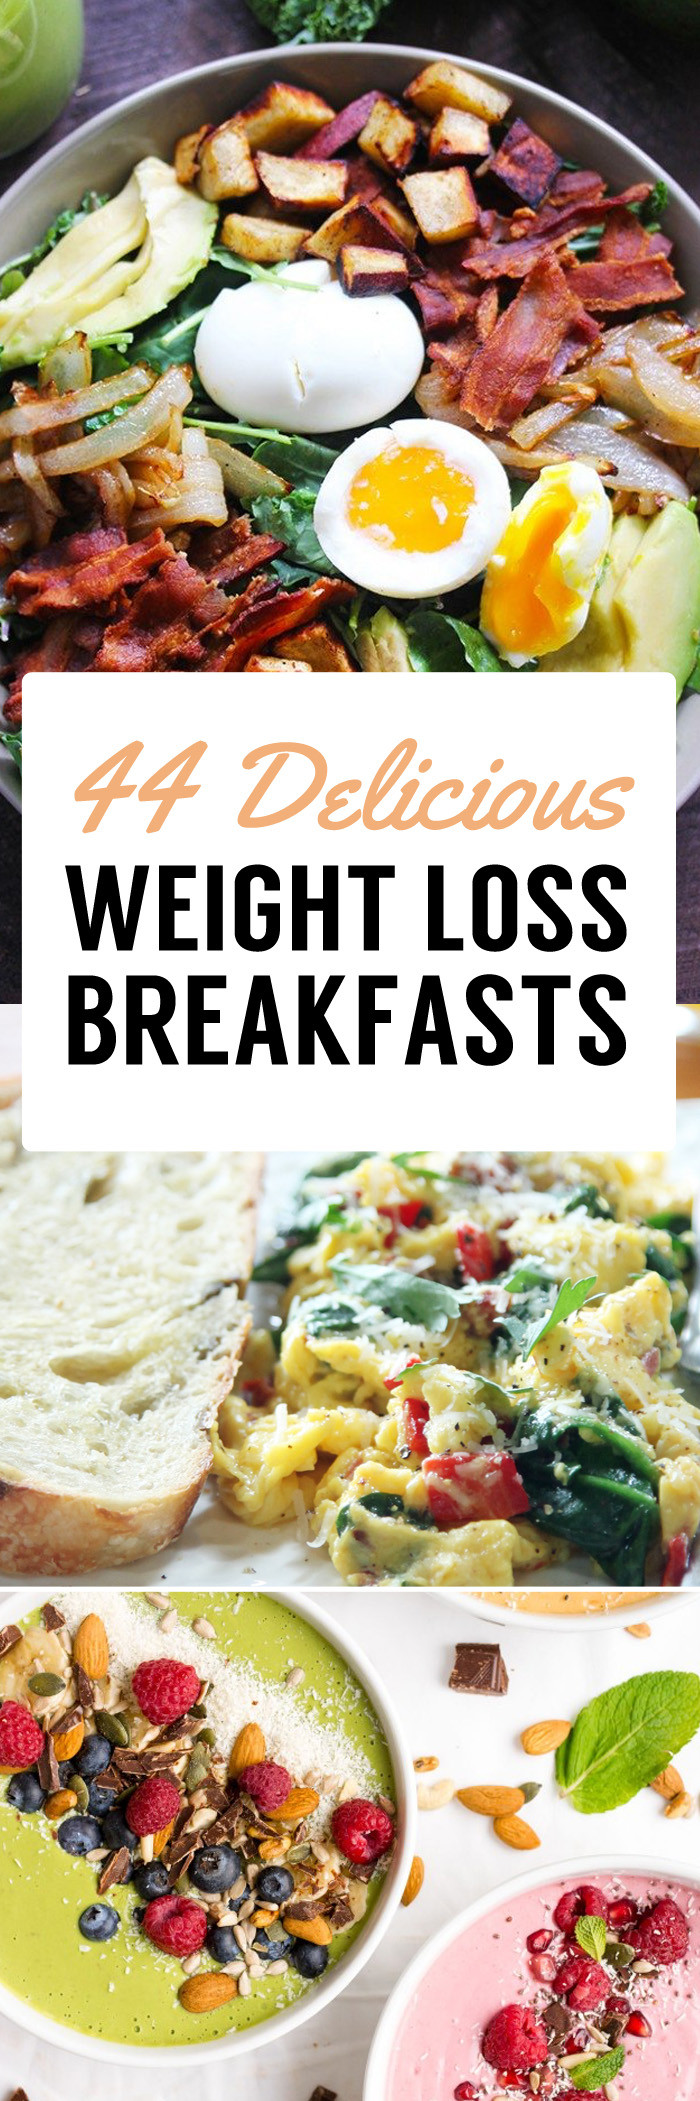 Weight Loss Breakfast Recipe
 44 Weight Loss Breakfast Recipes To Jumpstart Your Fat